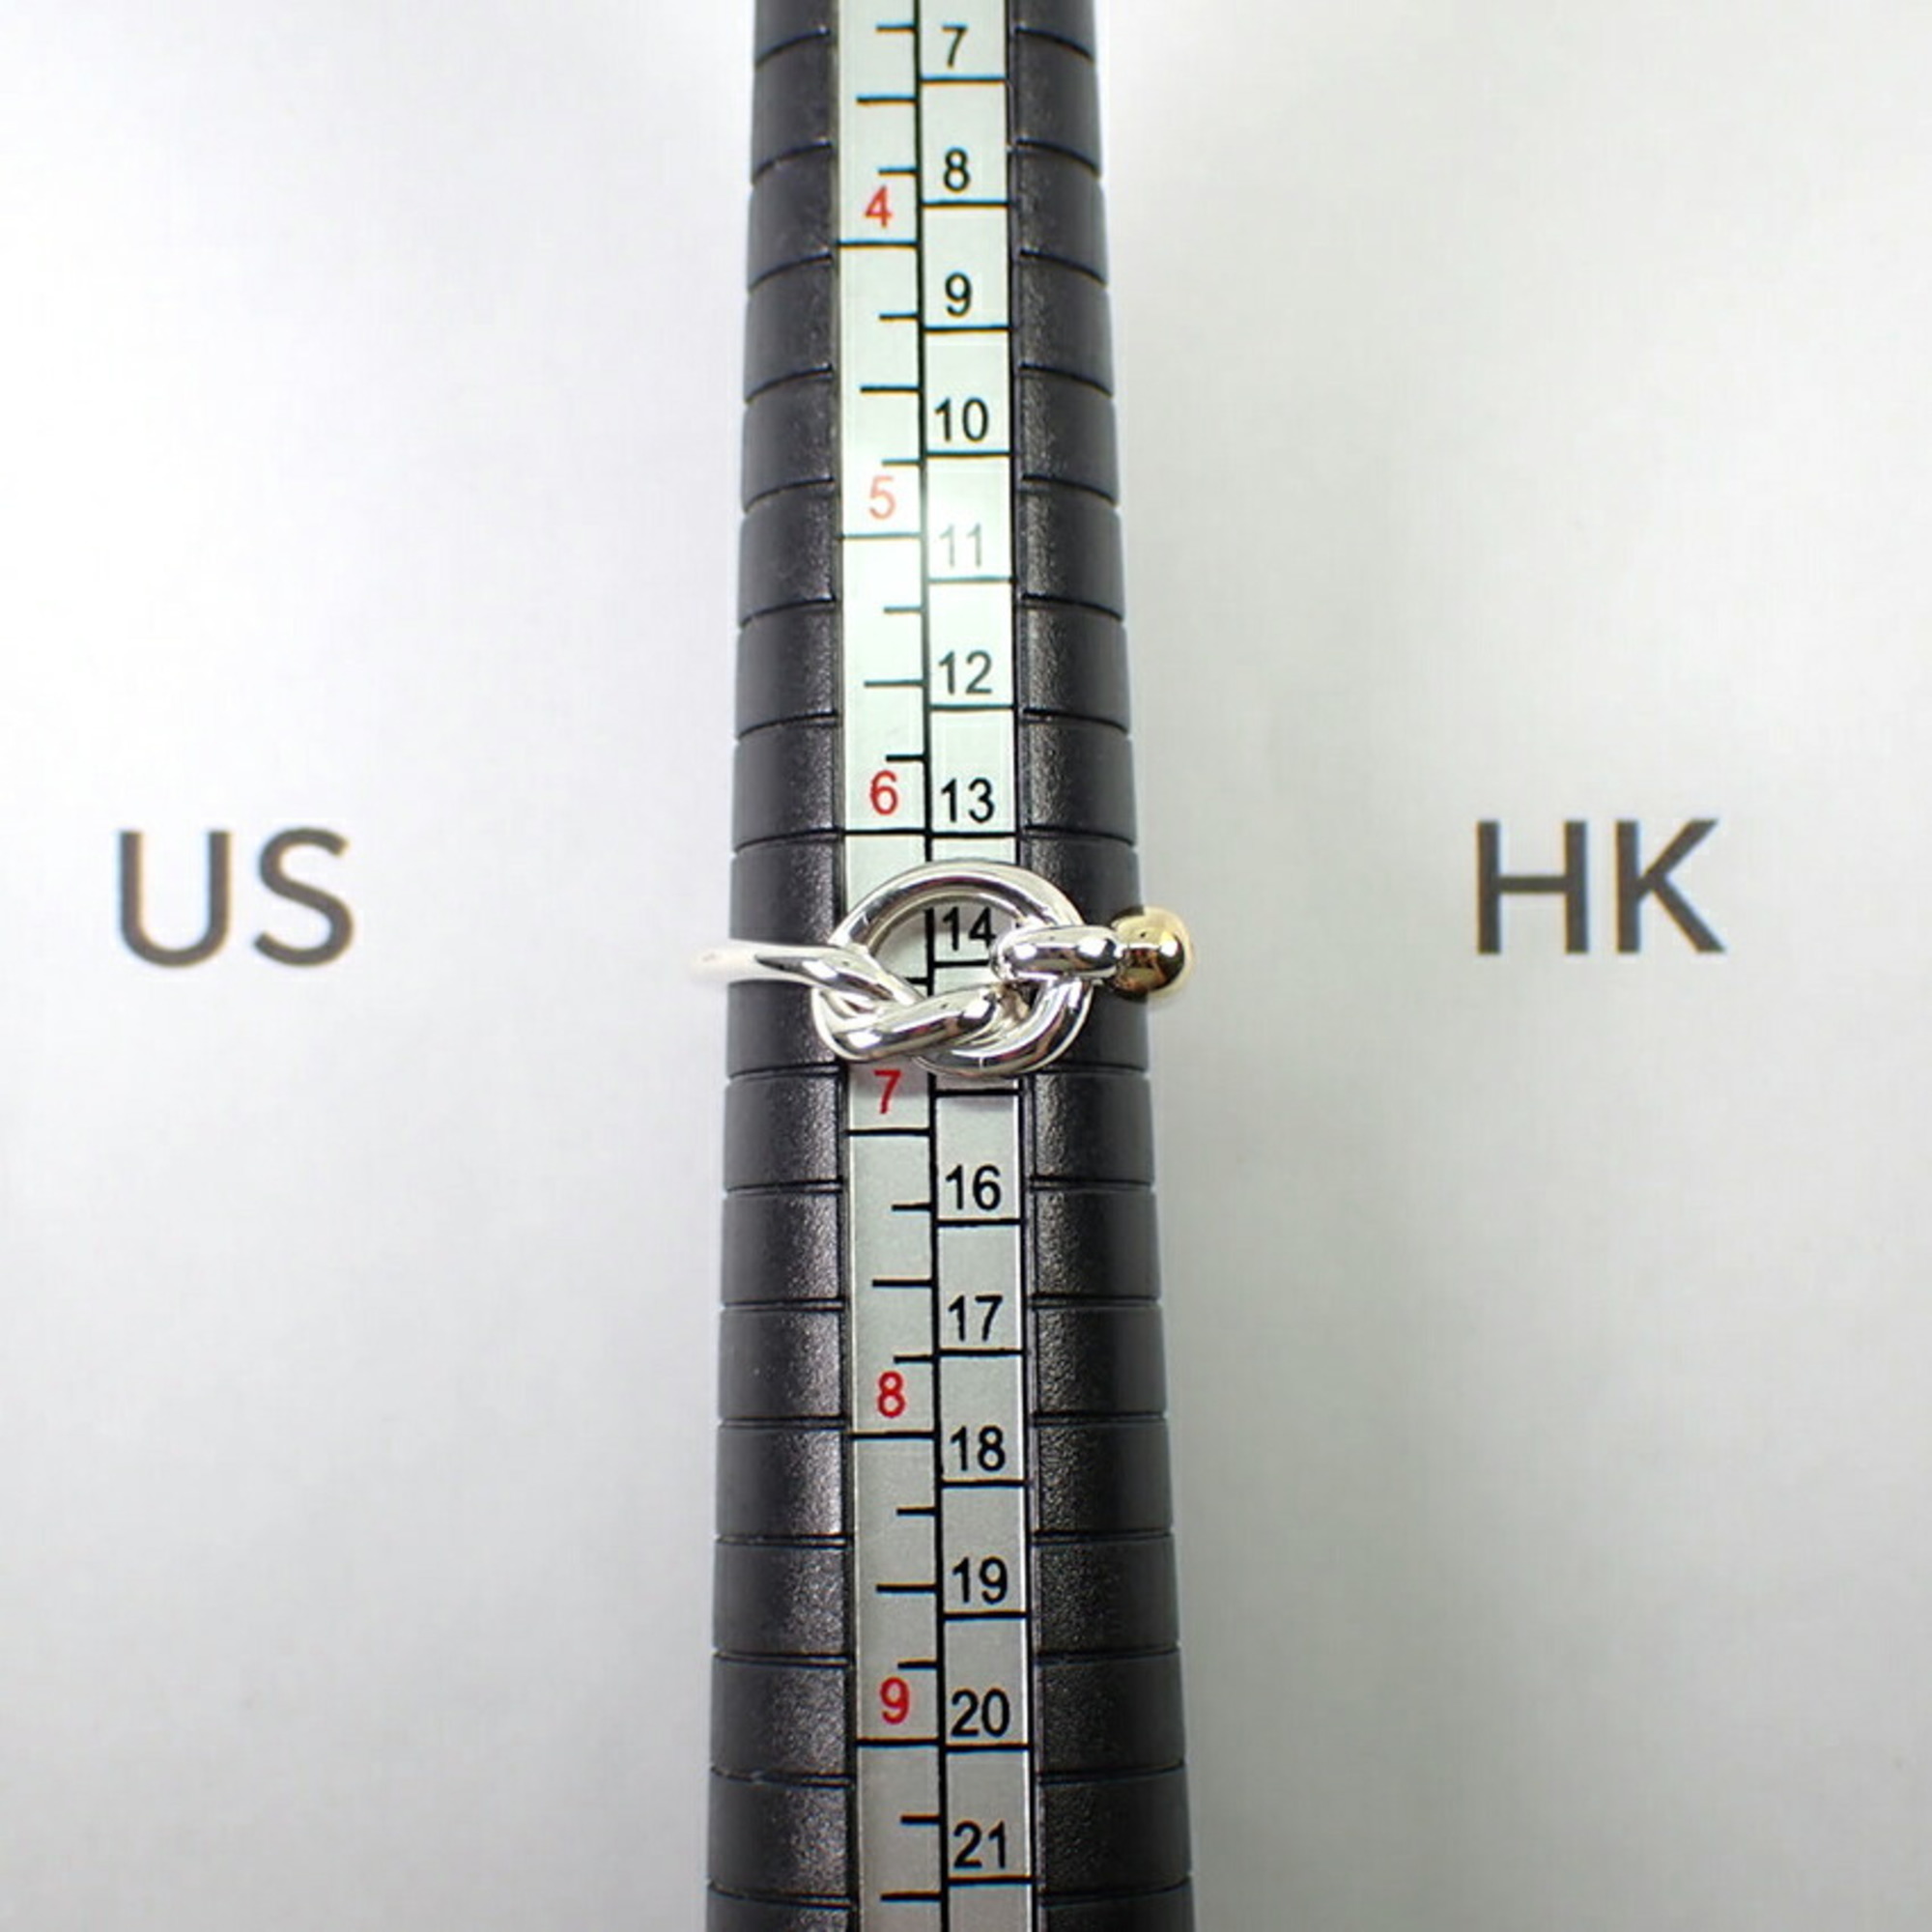 TIFFANY 925 750 Love Knot Combination Ring Size 12.5